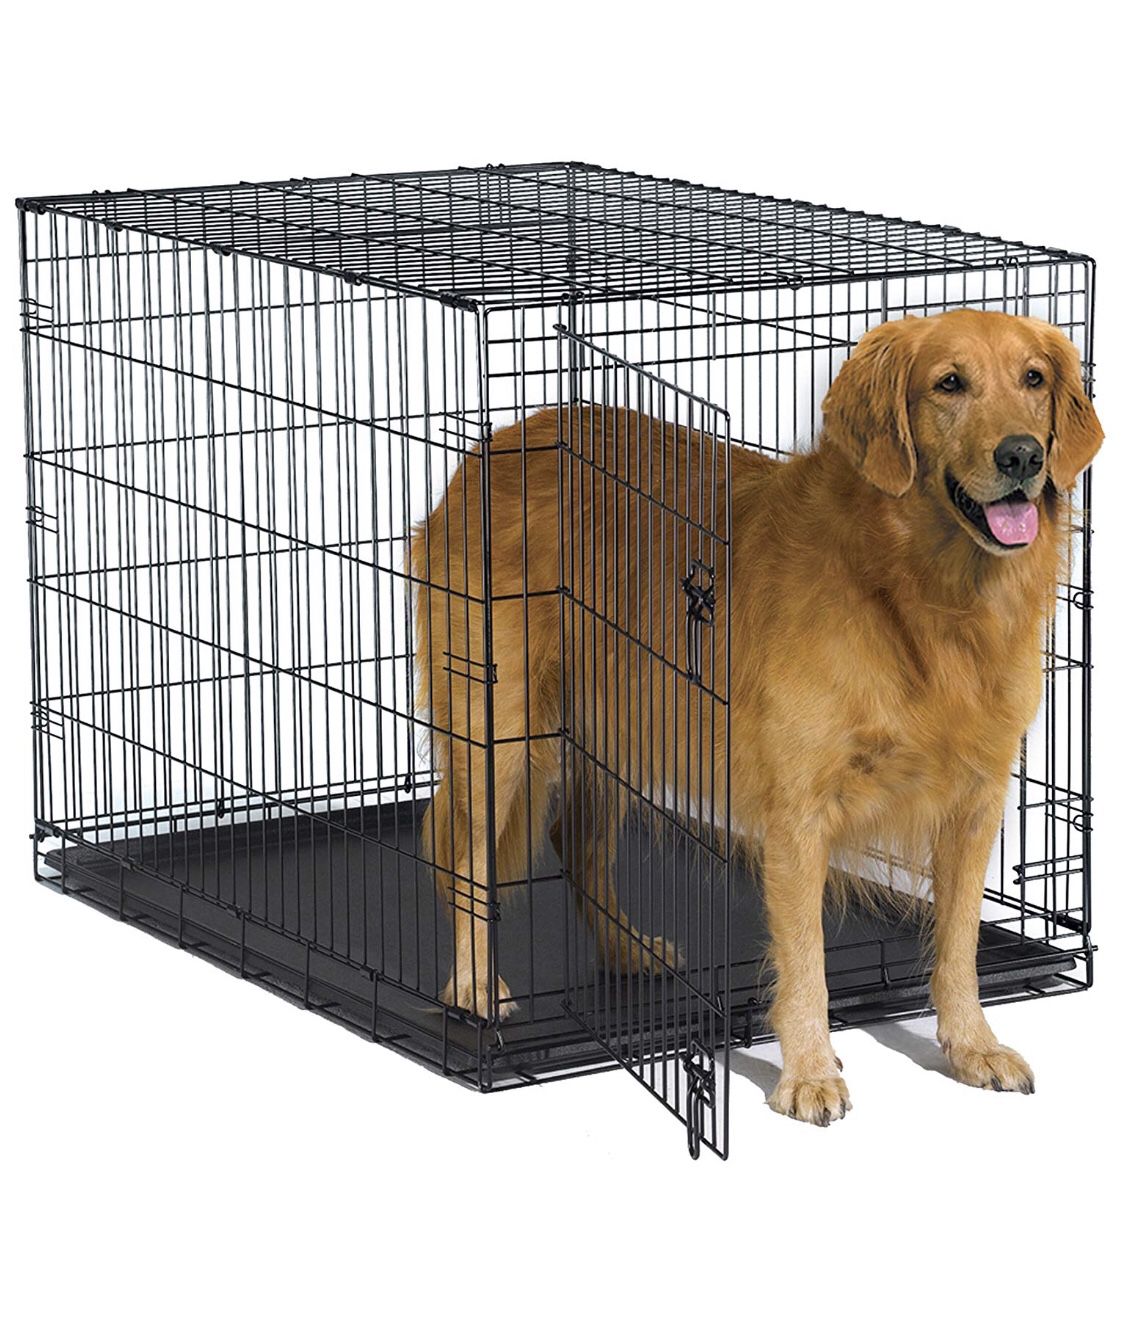 Unopened 42” dog crate brand new